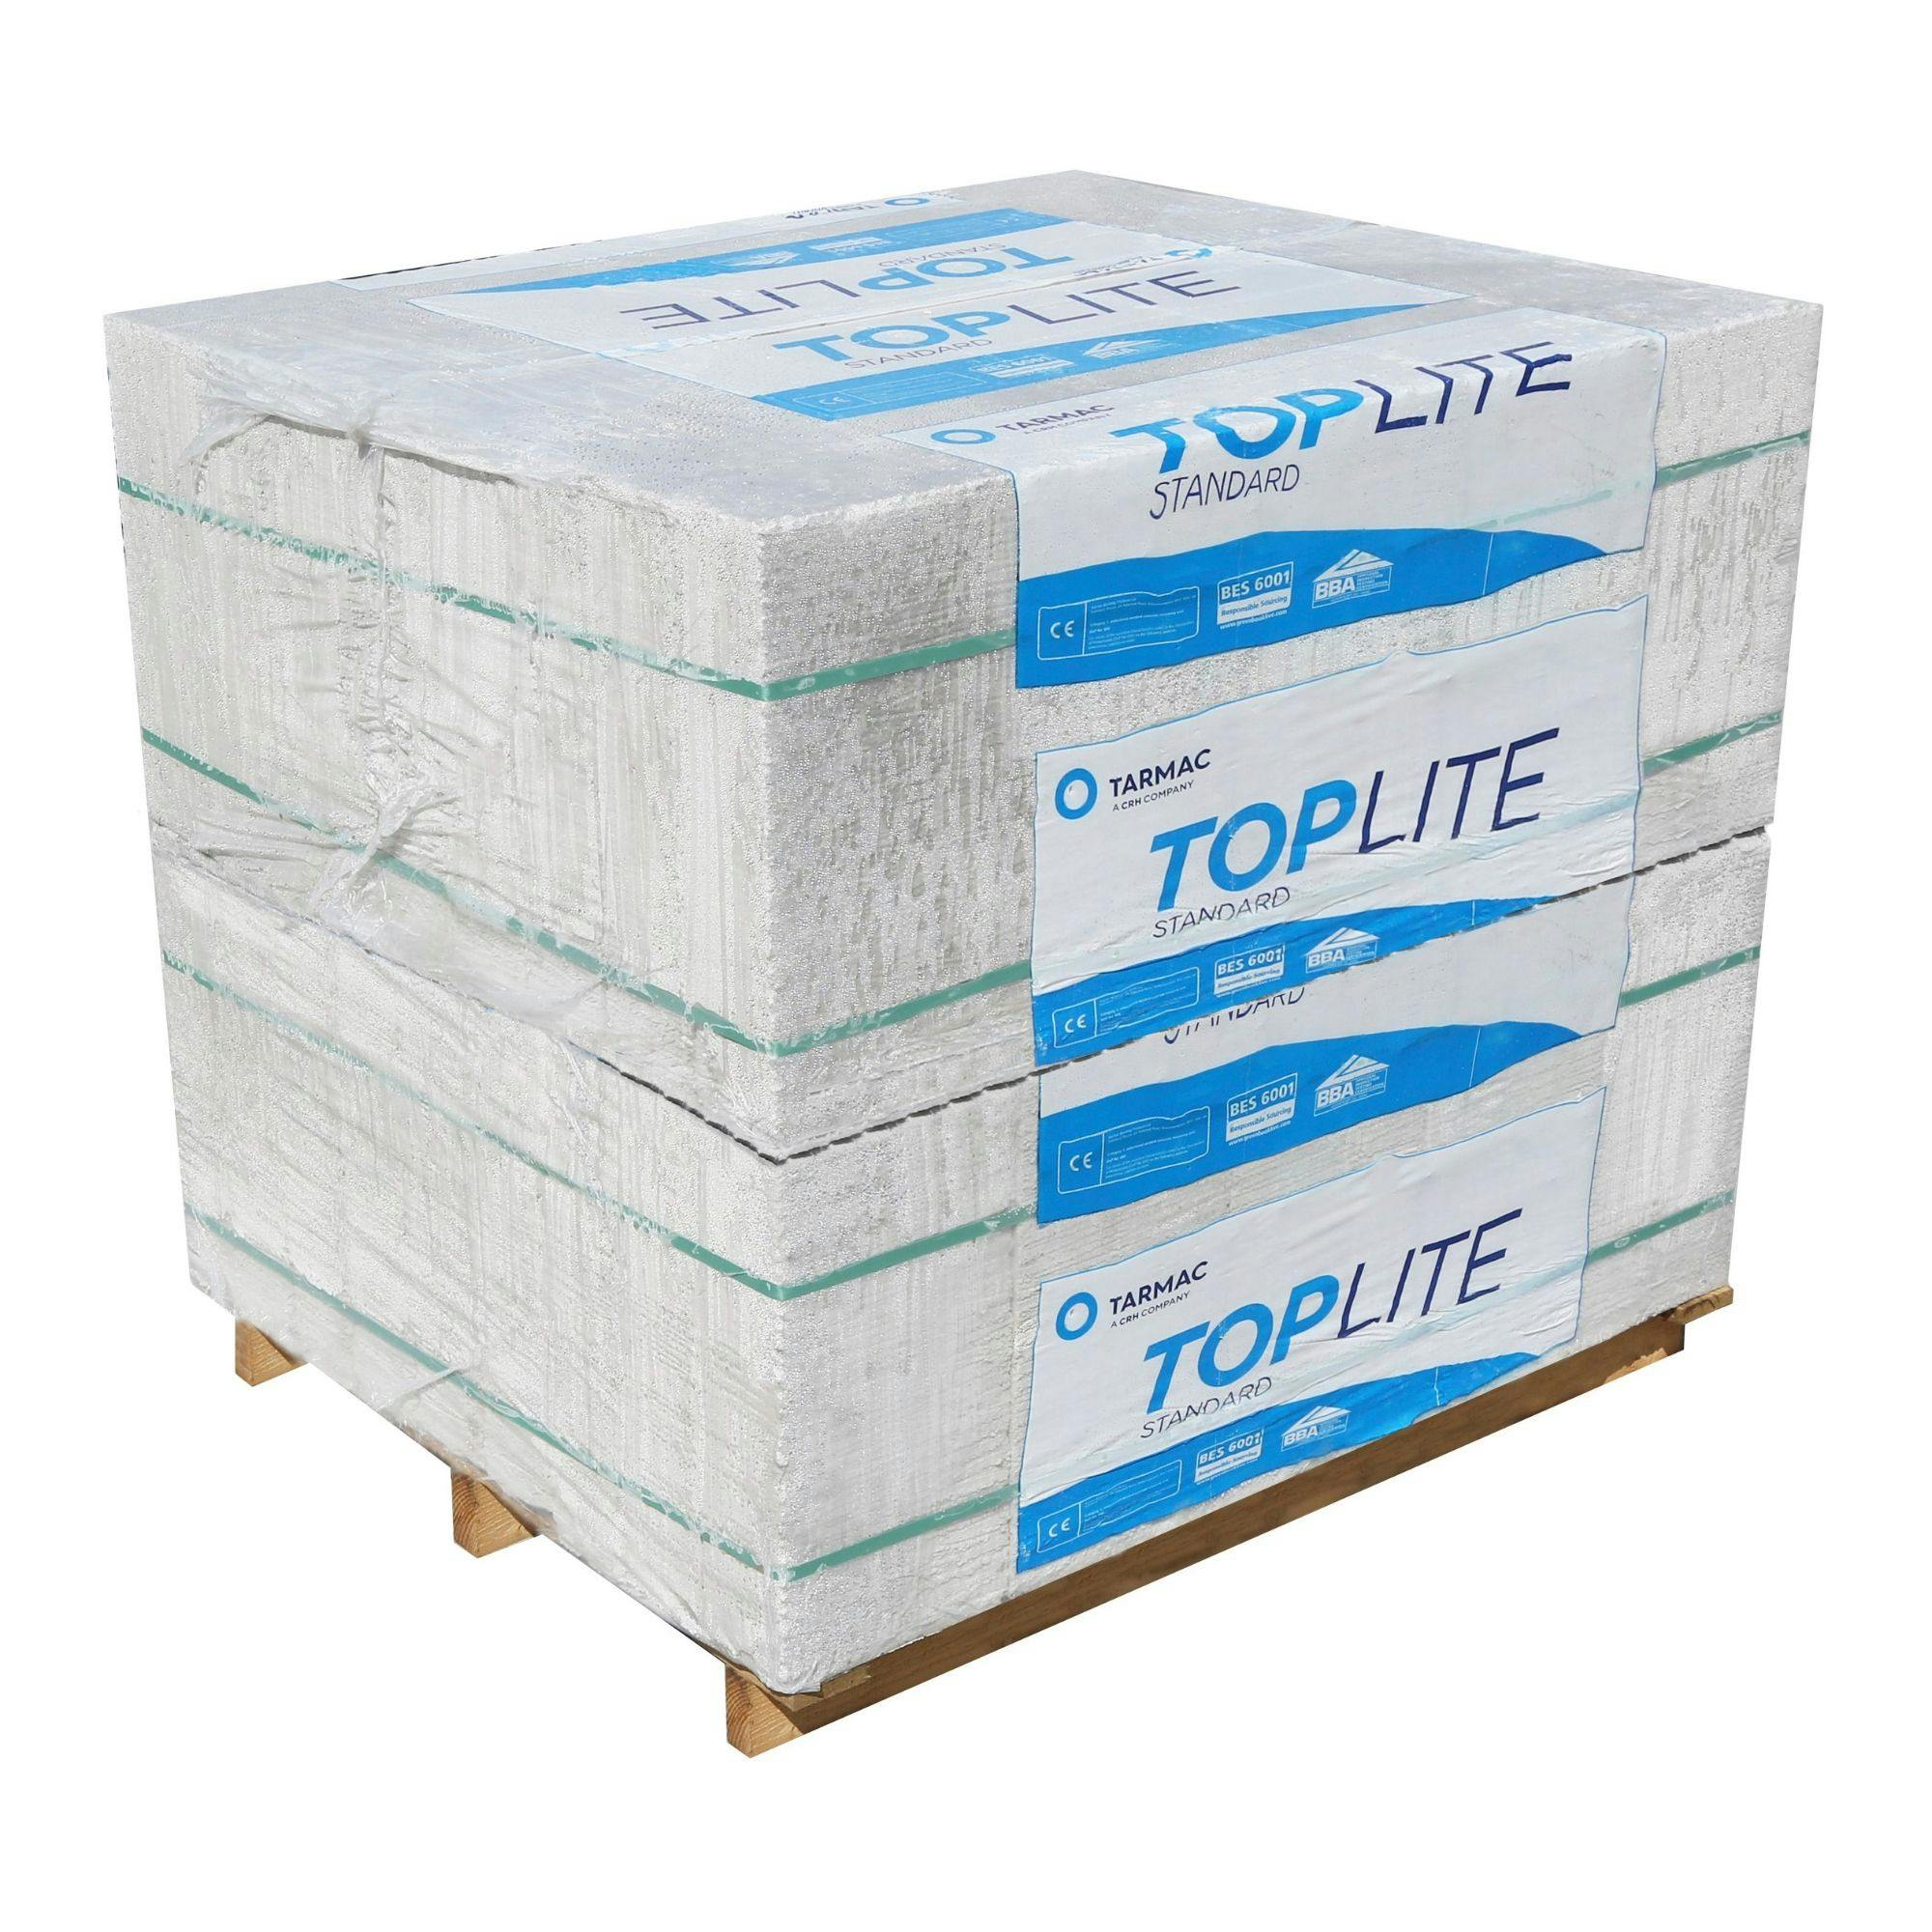 Tarmac Toplite Gti Aircrete Concrete Block (L)440mm, Pack Of 90